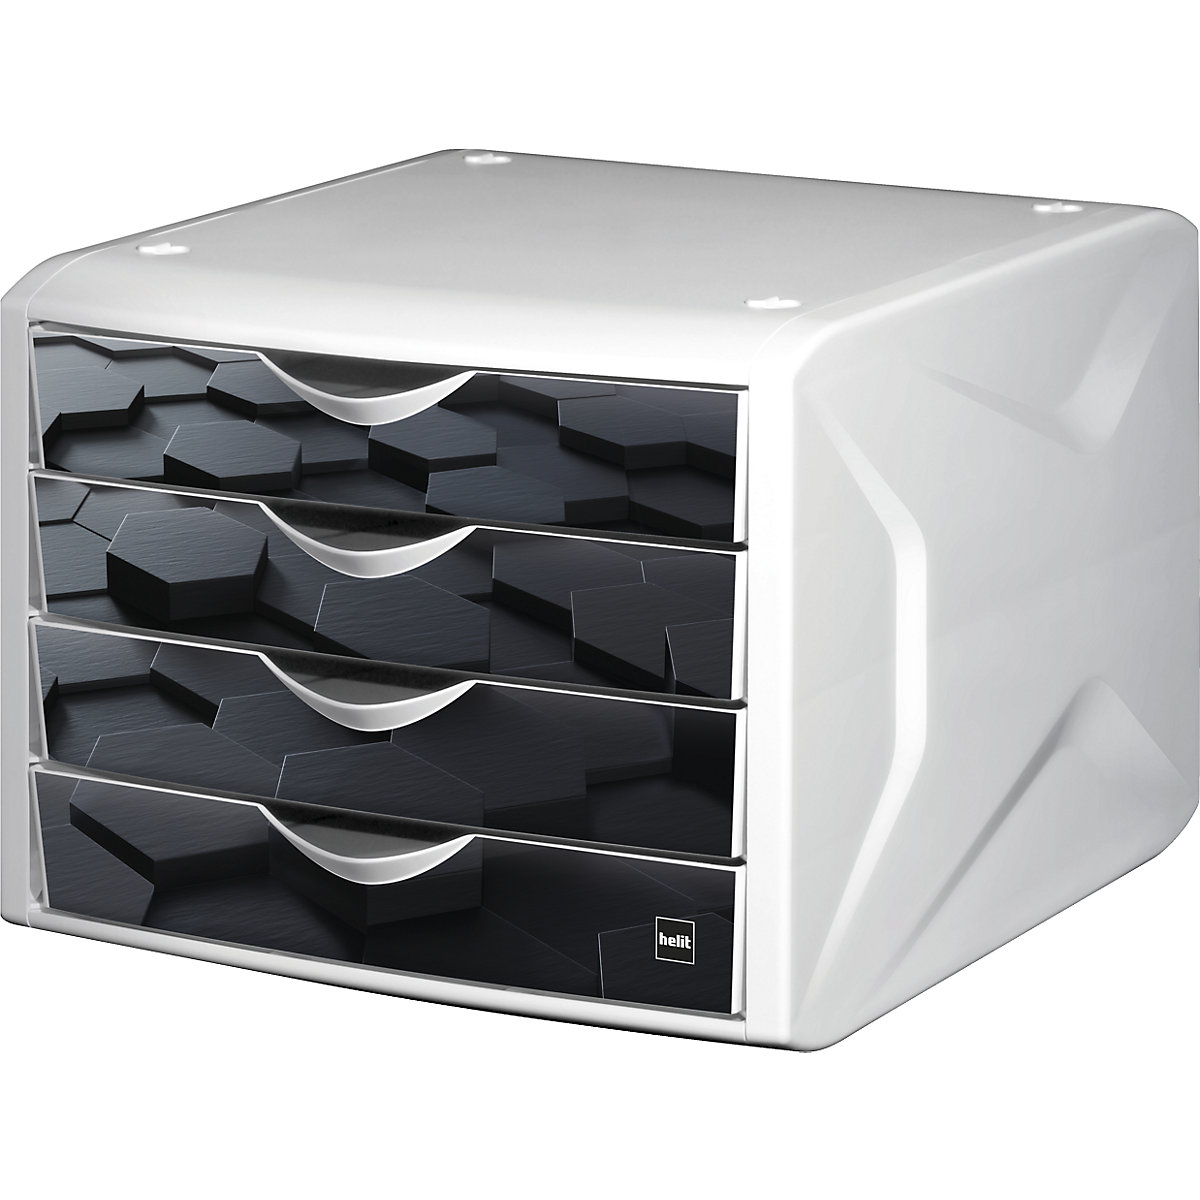 Zásuvkový box – helit, v x š x h 212 x 262 x 330 mm, OJ 5 ks, dizajn zásuvky dark hexagon-8